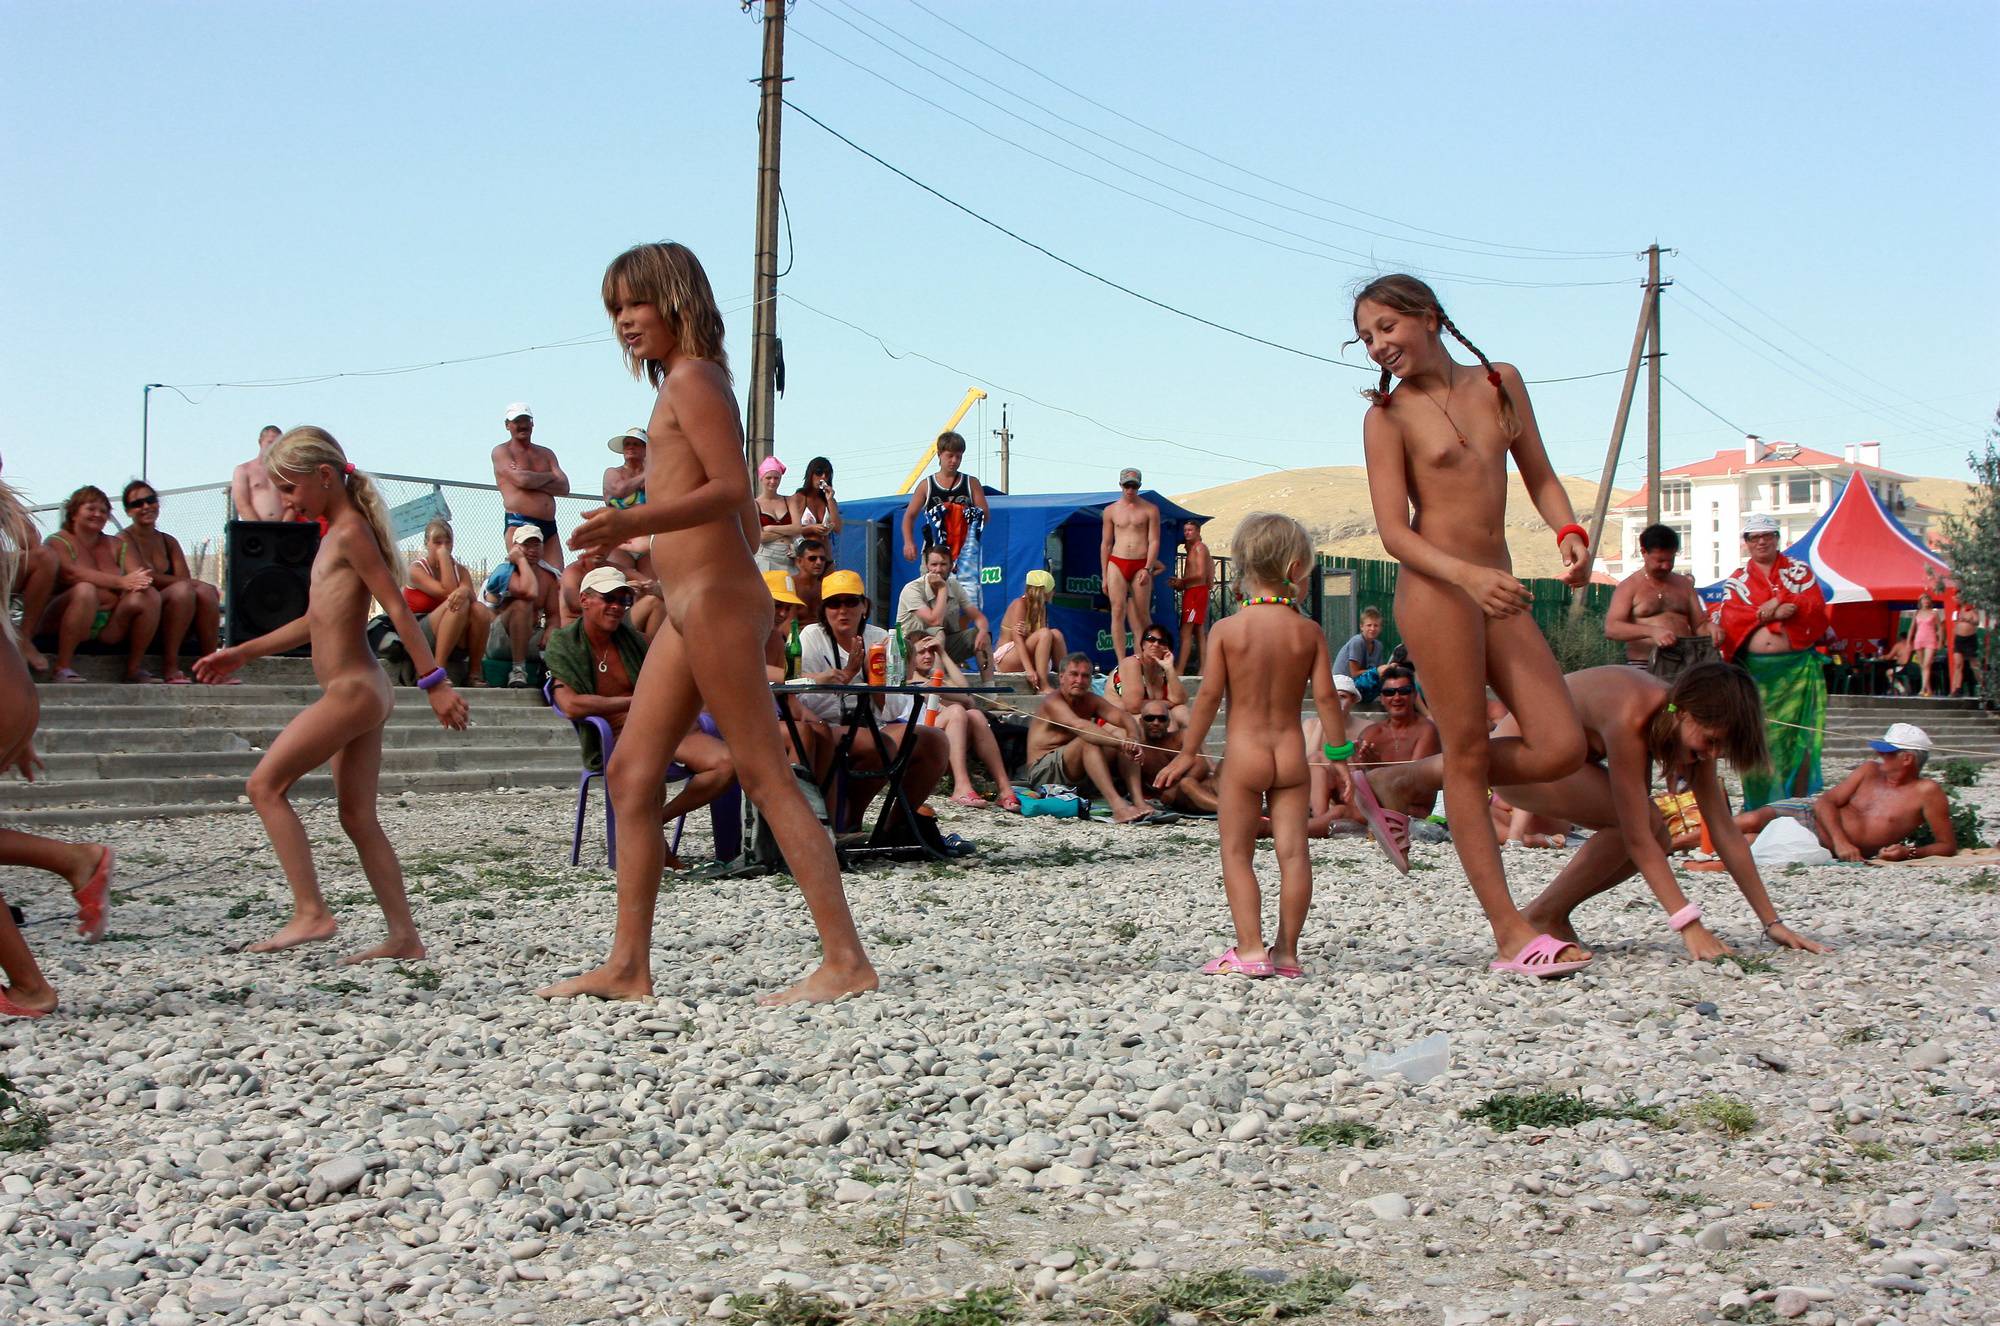 Nude Contestant Walk-Off - Nudist Pictures - 2